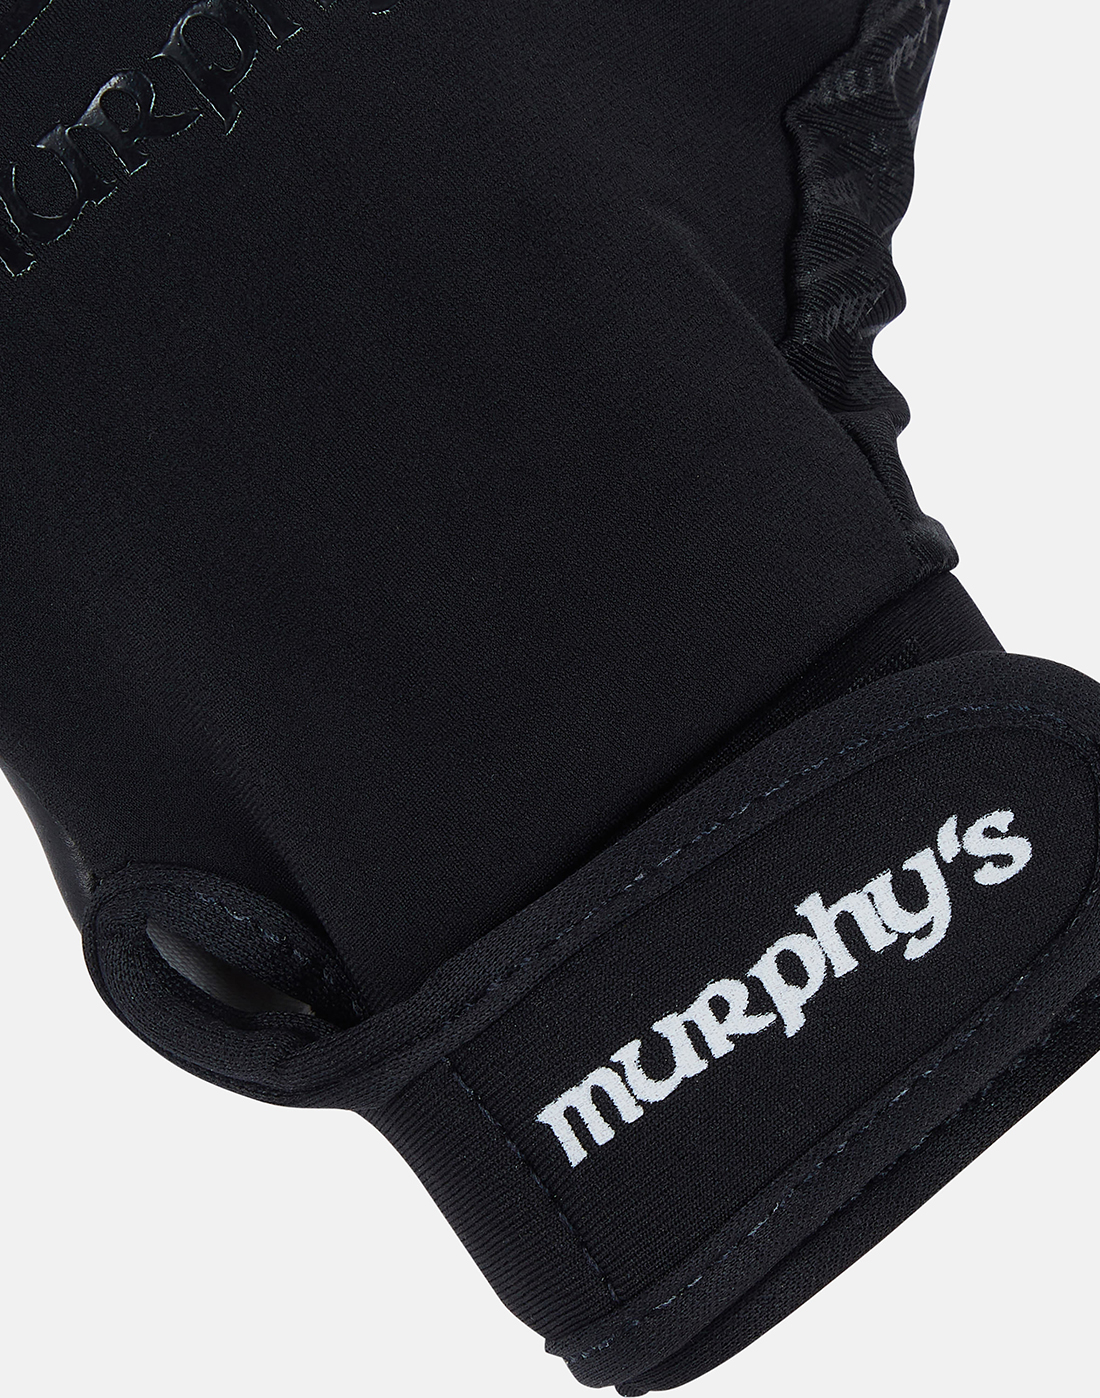 Murphys Adults GAA Glove - Black | Life Style Sports IE